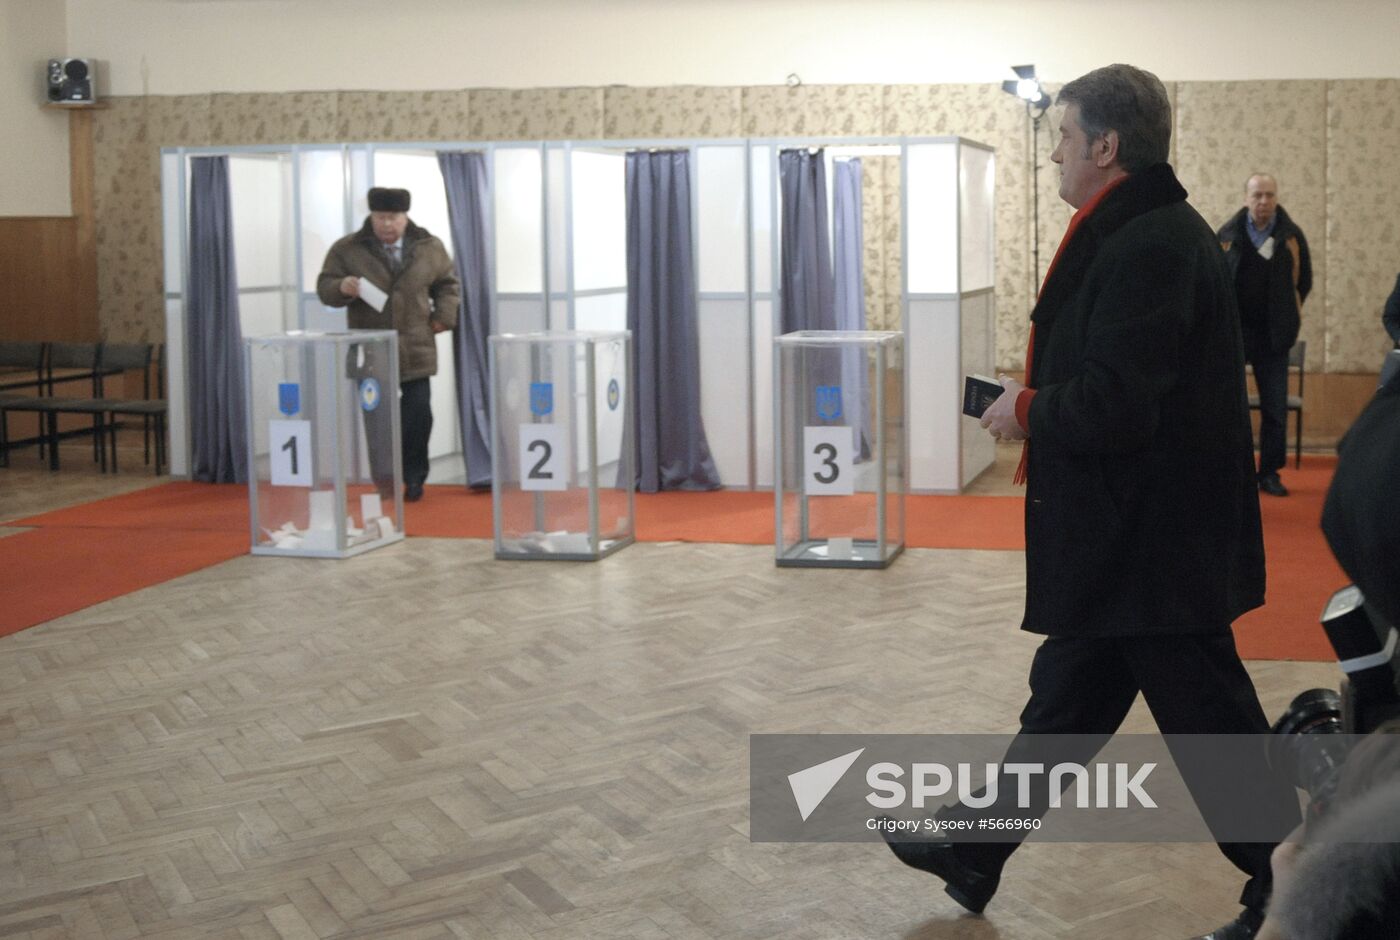 Viktor Yushchenko votes in Ukrainian presidential election